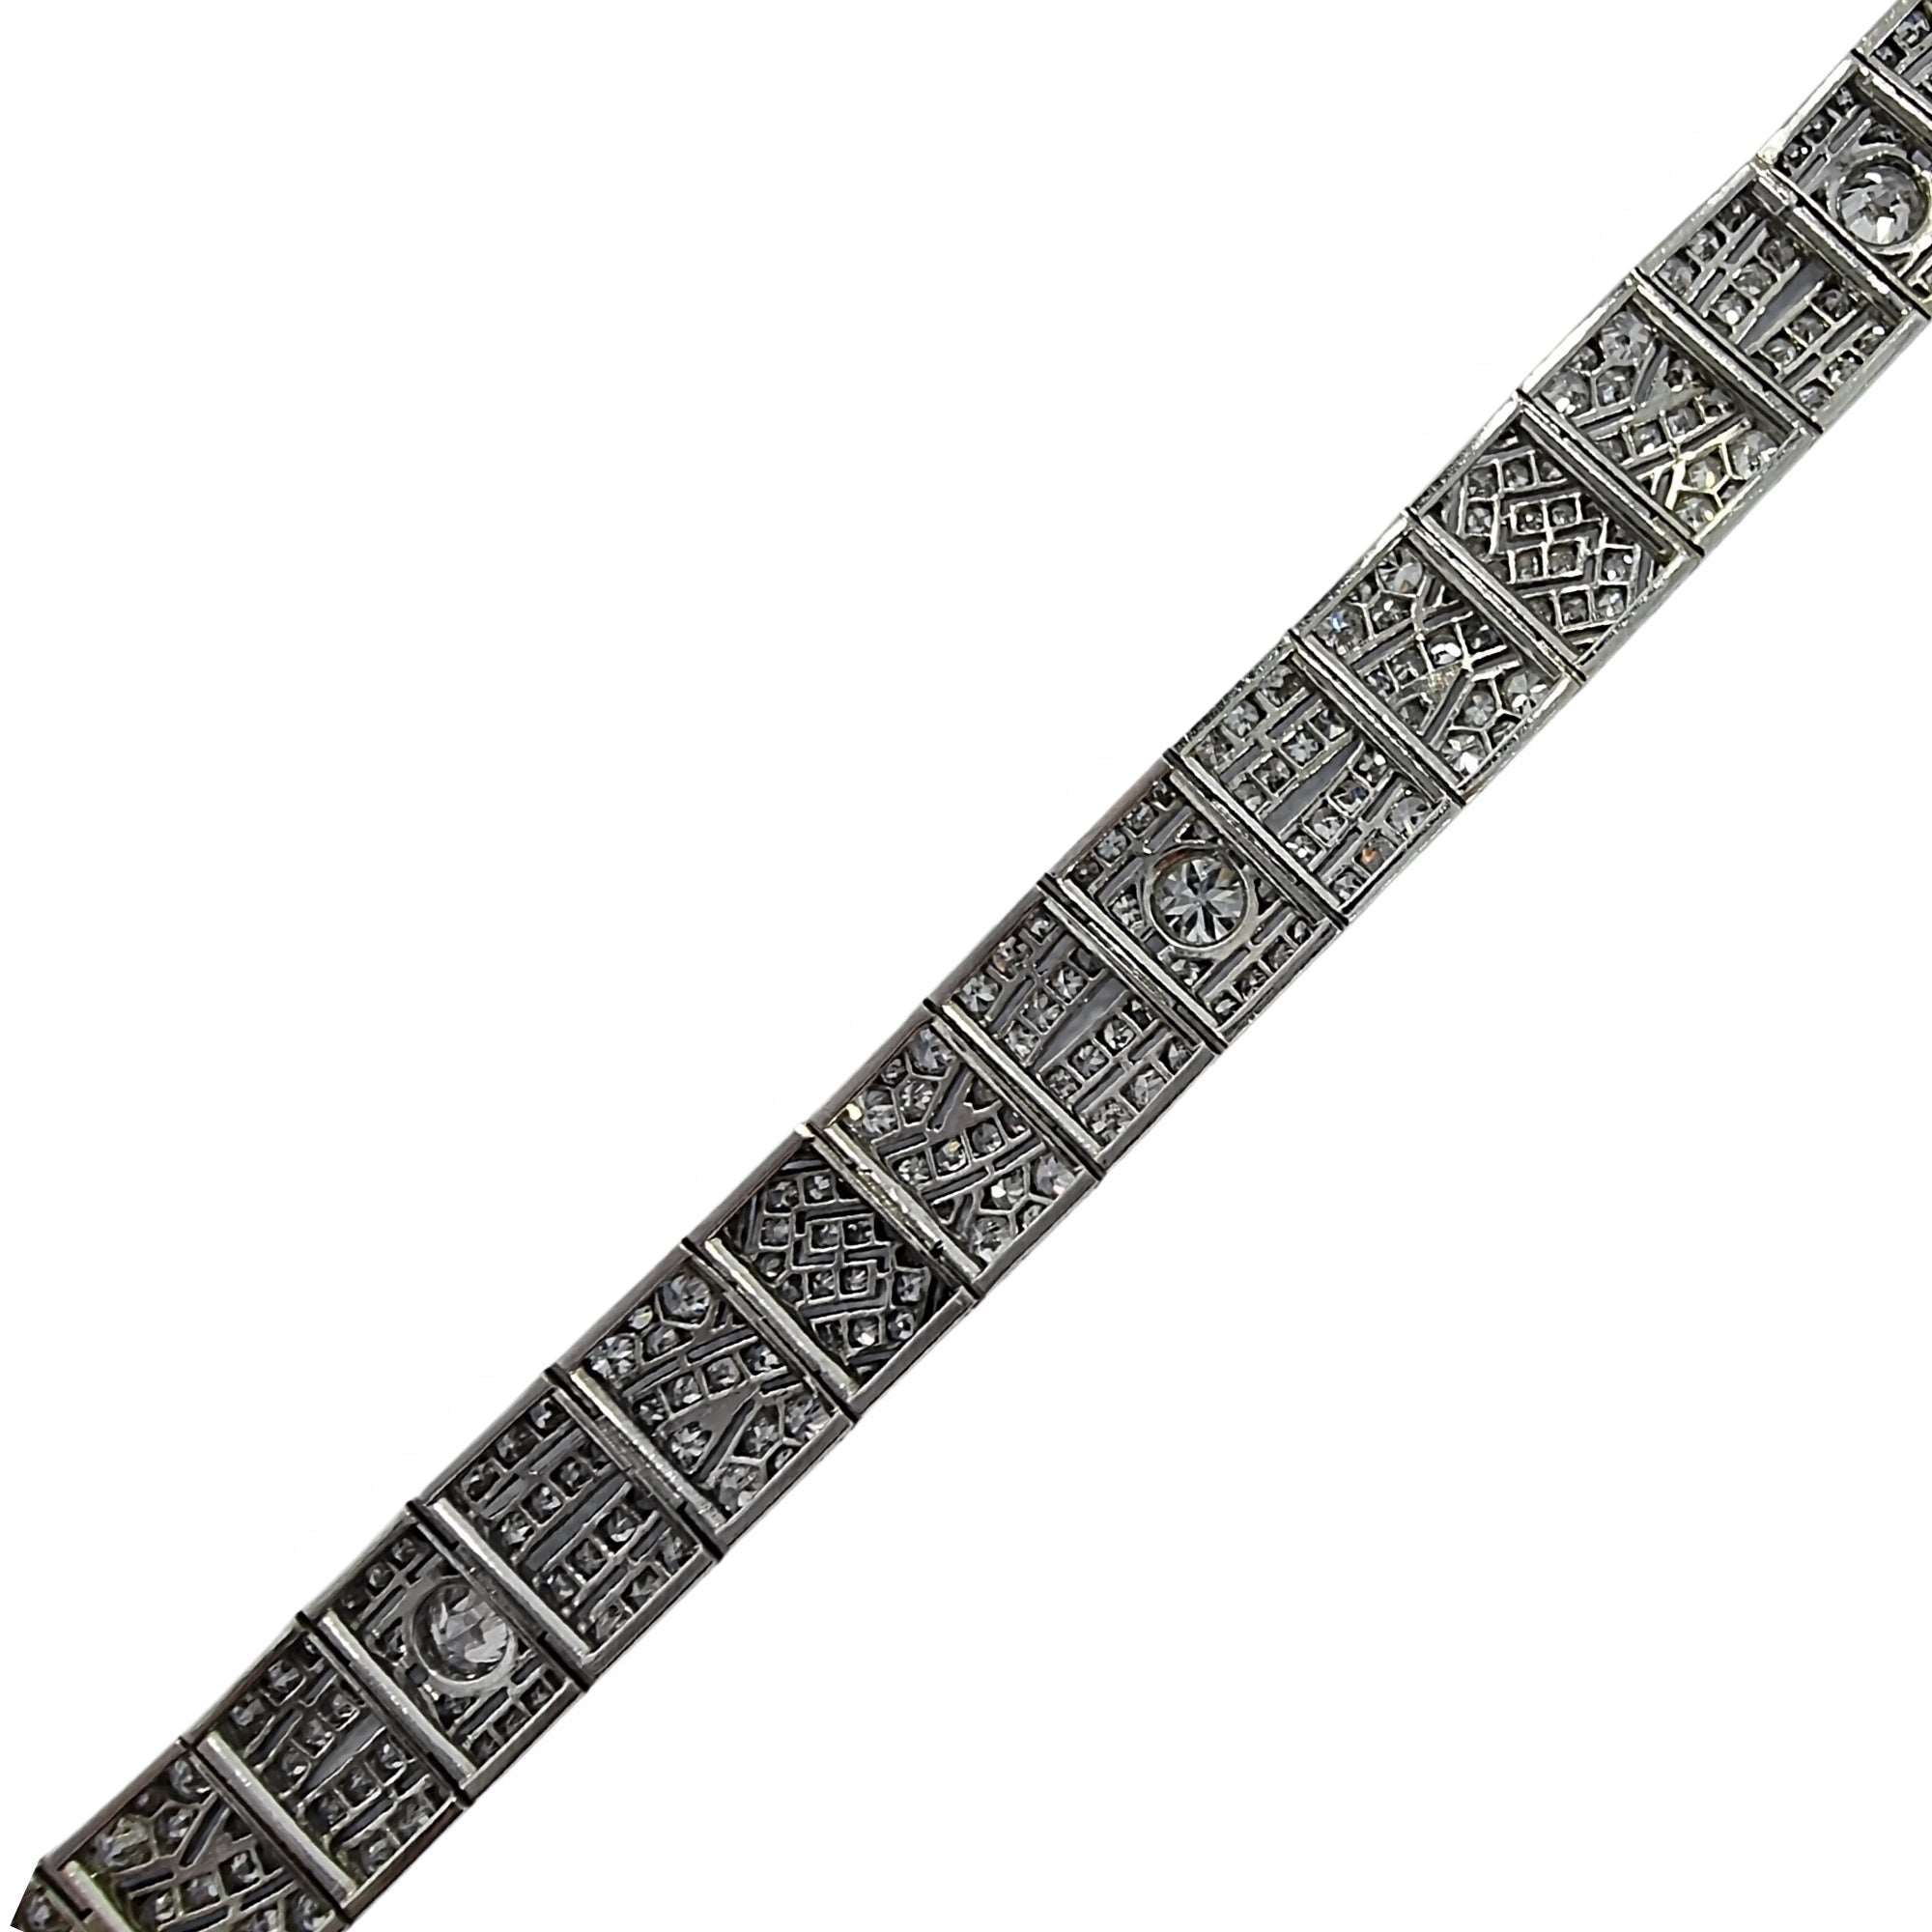 1920's Tiffany & Co Diamond Bracelet